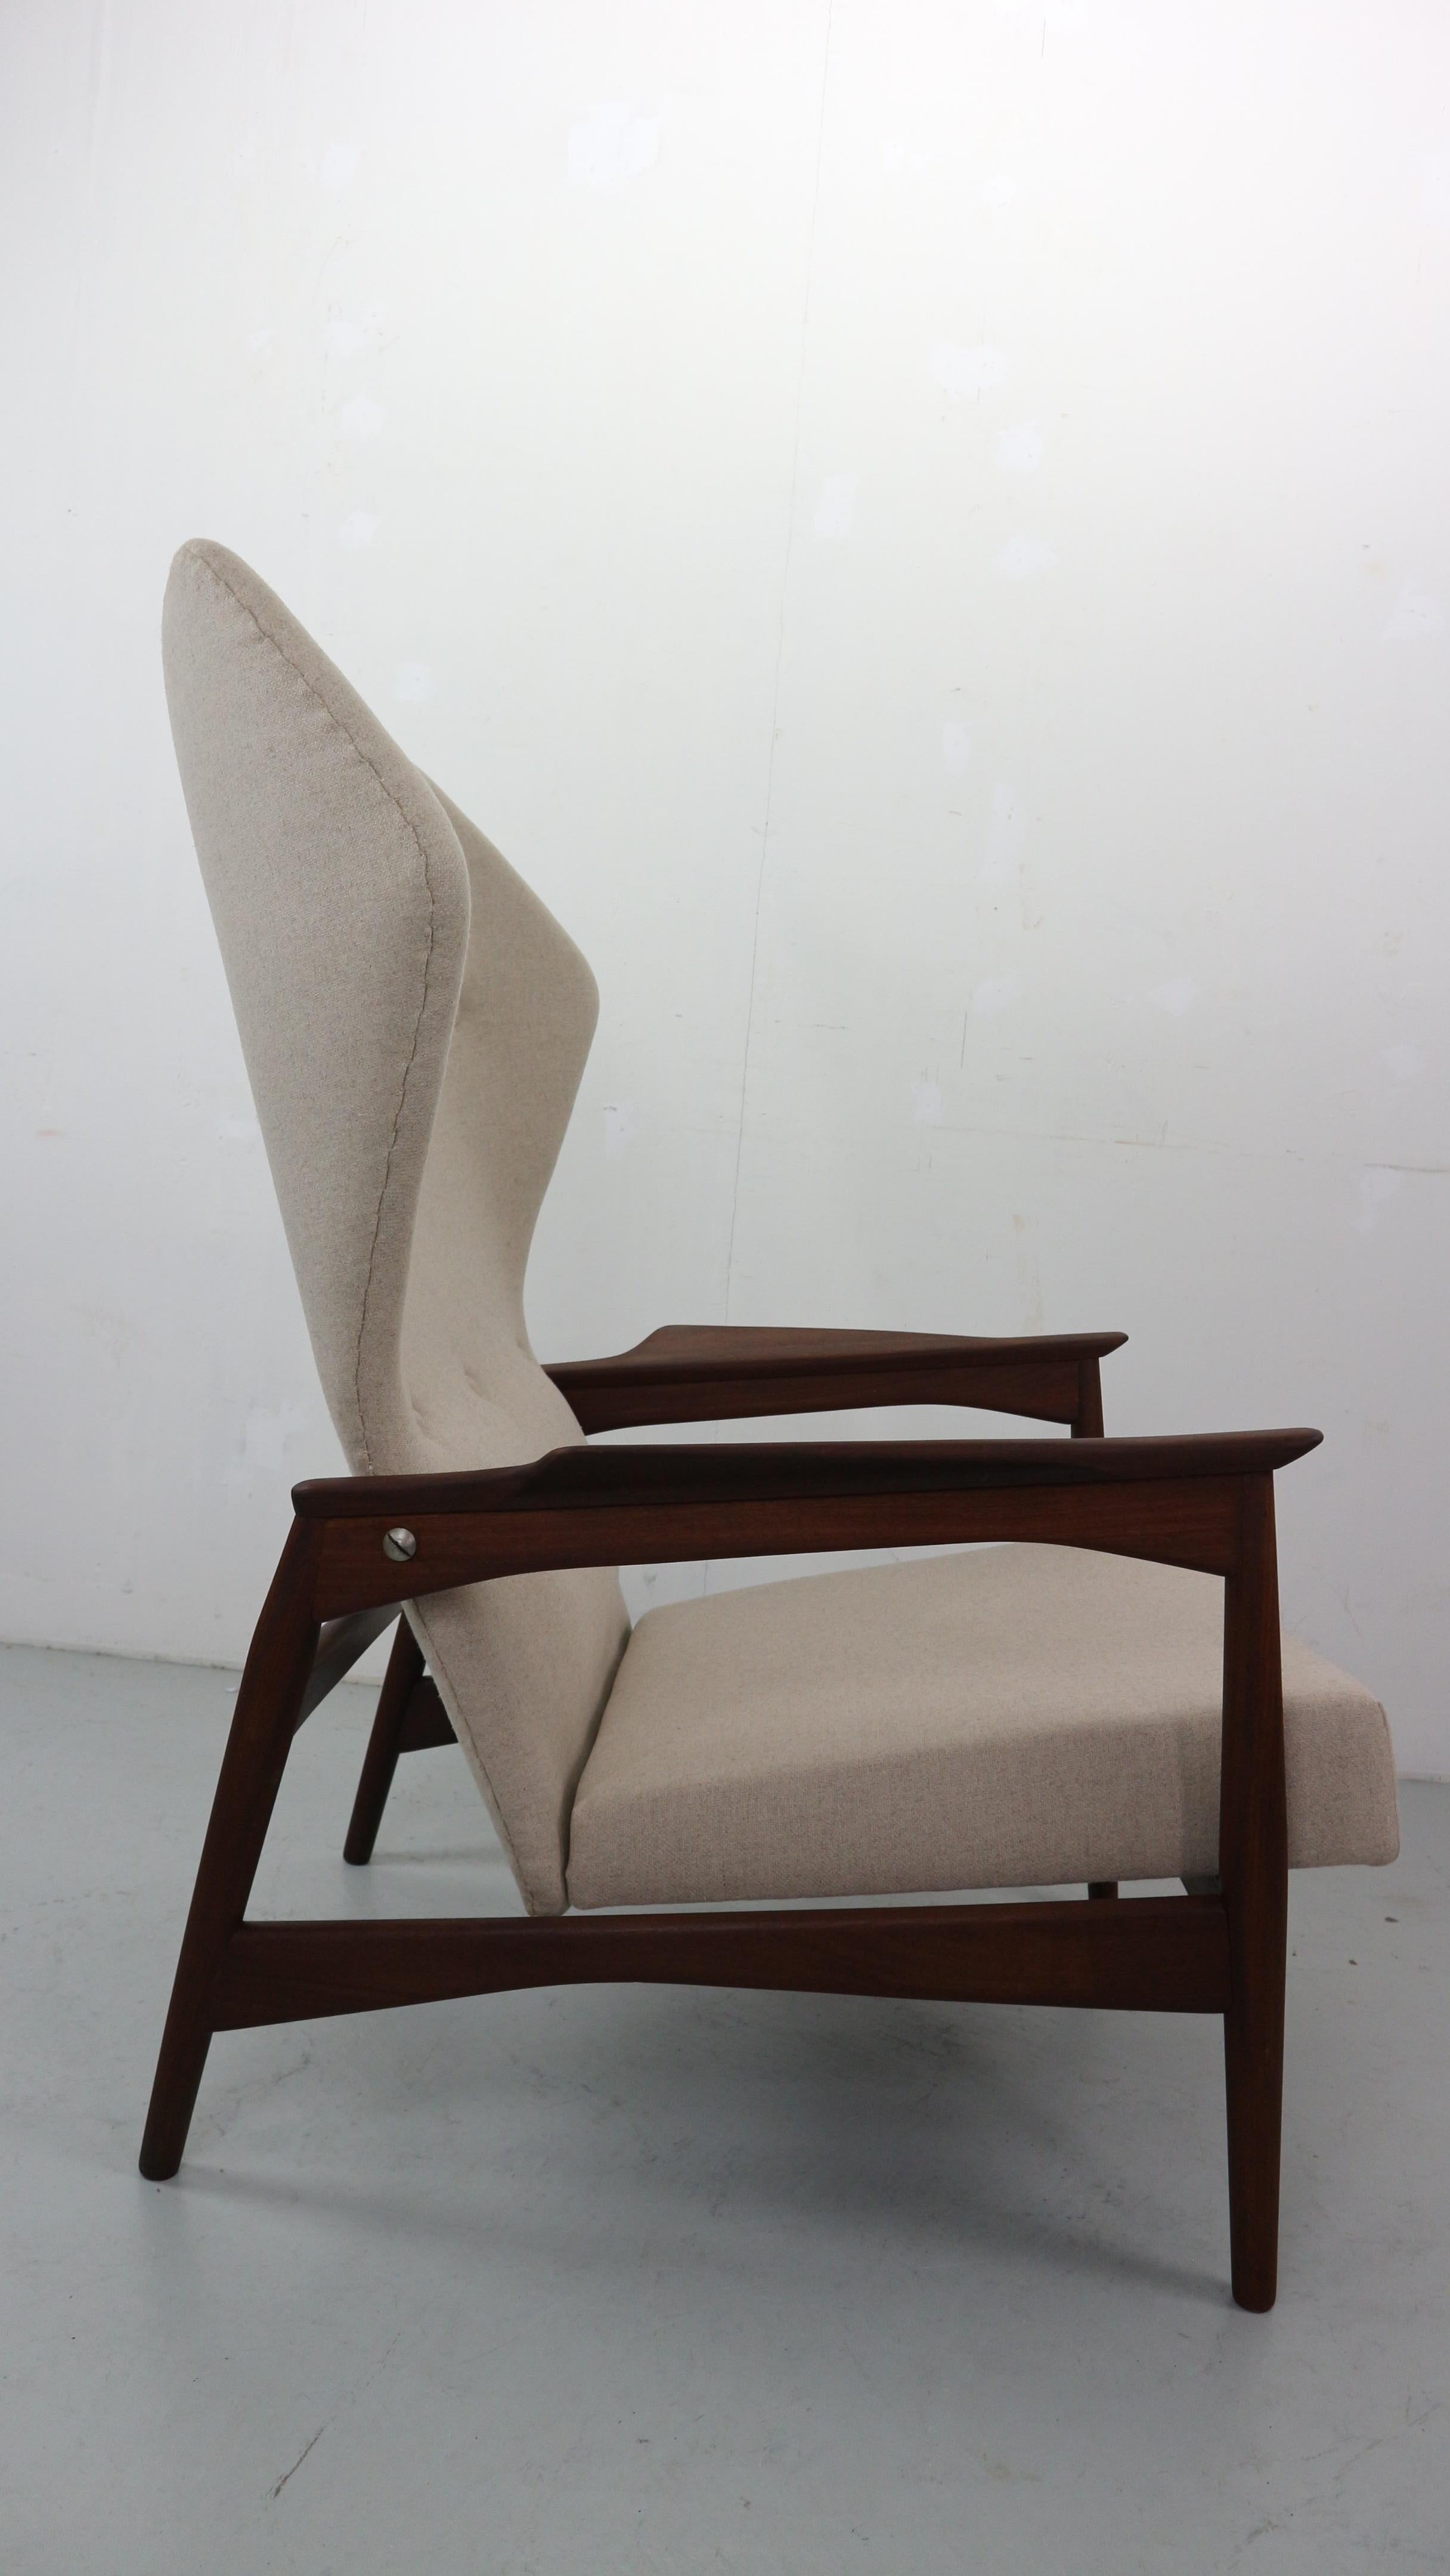 20th Century Danish Adjustable Wingback Lounge Chair in Teak, by Ib KOFOD LARSEN